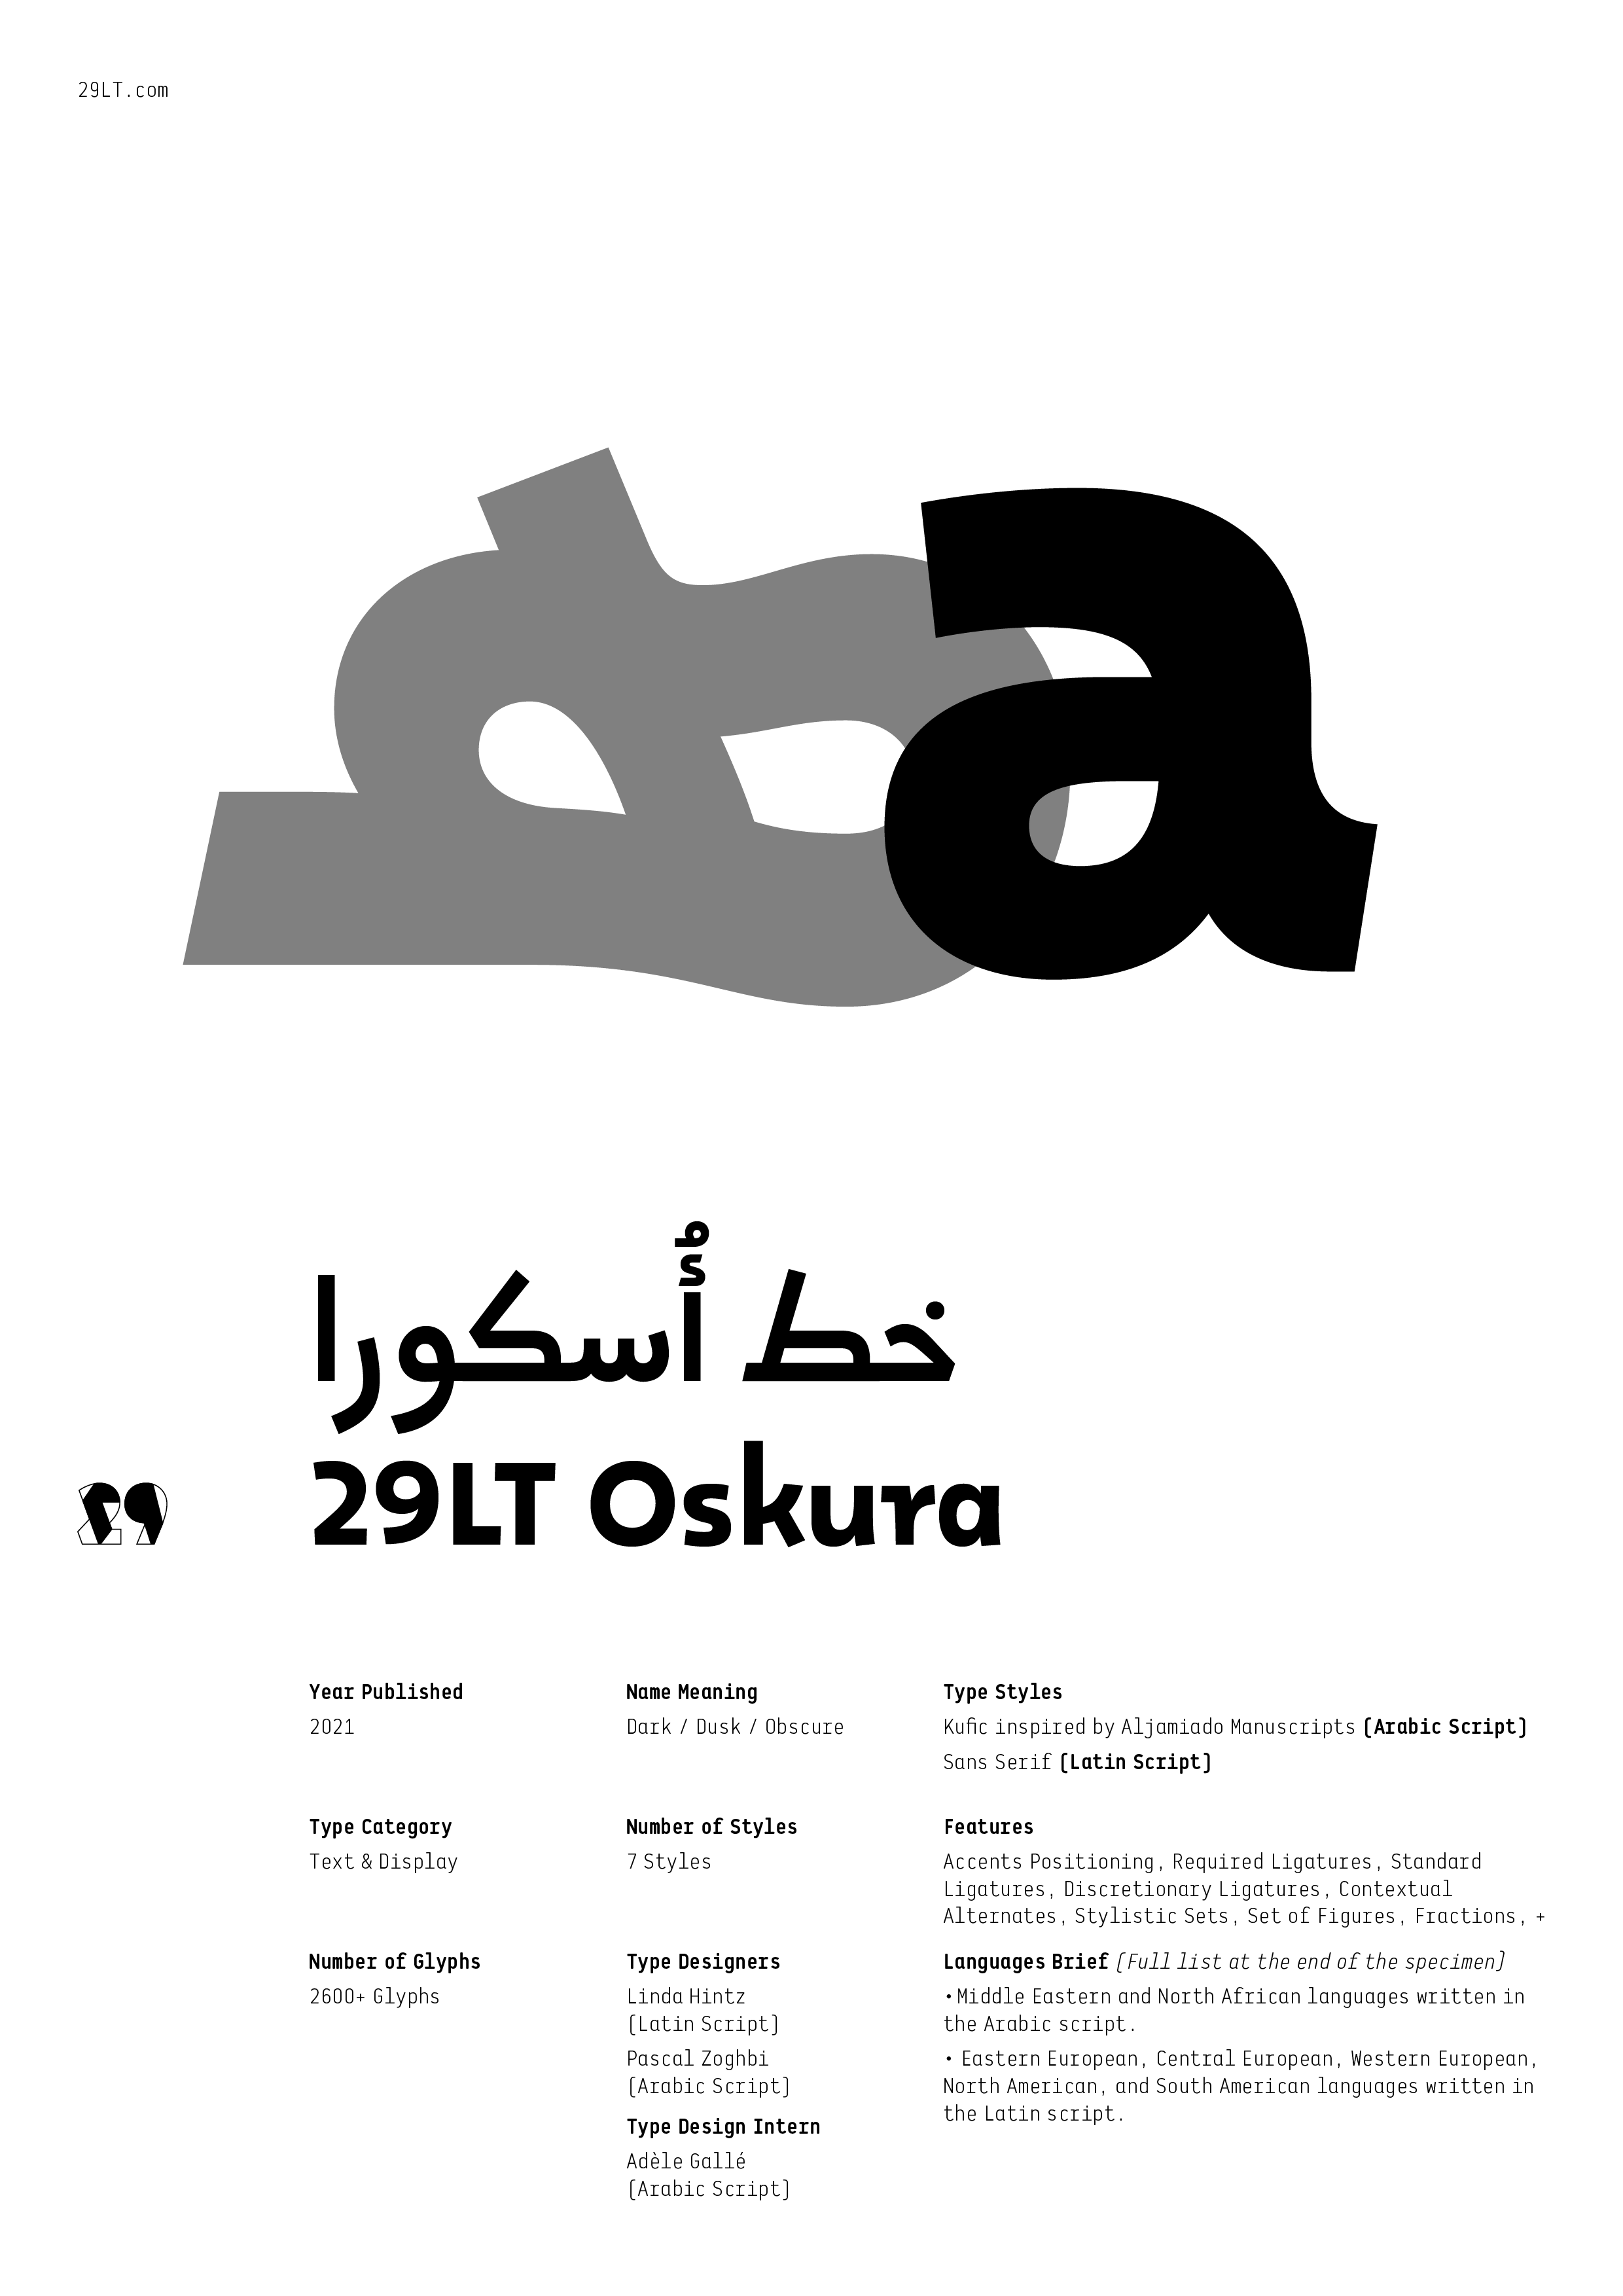 29LT Oskura-PDF1